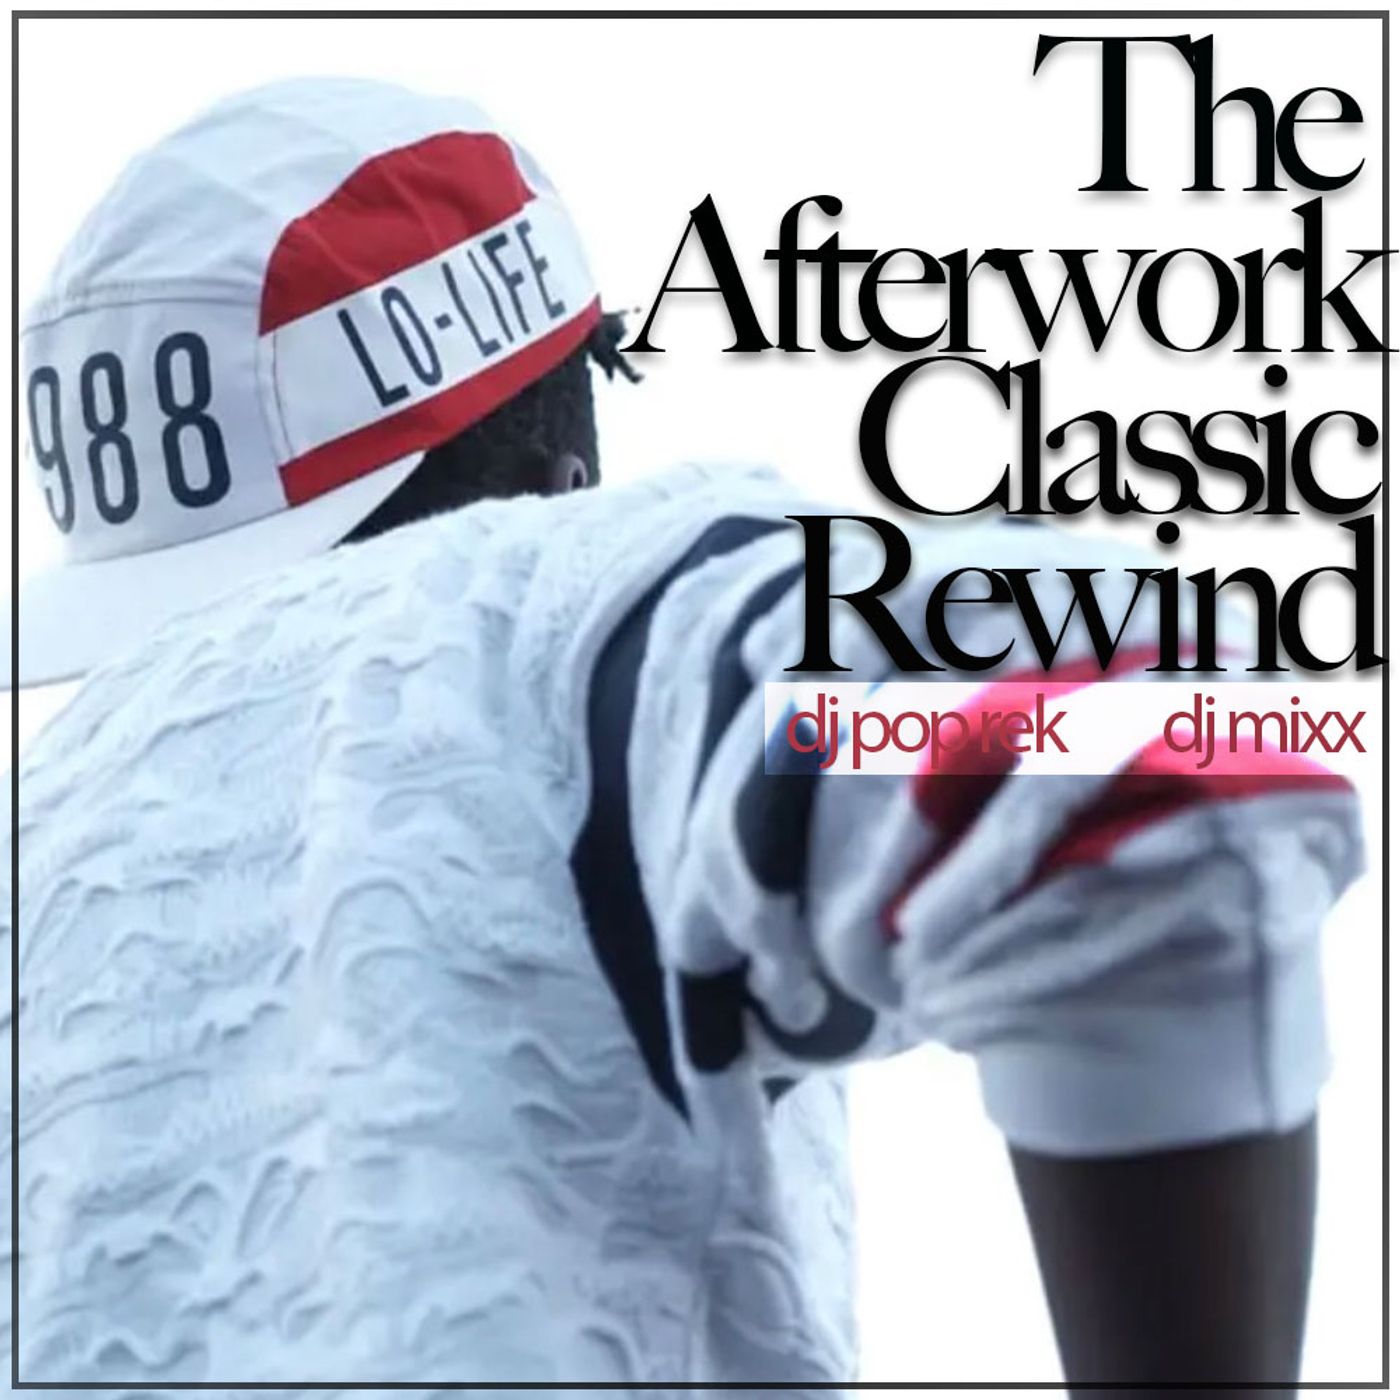 The Afterwork Classic Rewind Ep 117 (08.11.23) w. Dj Mixx & Dj Pop Rek